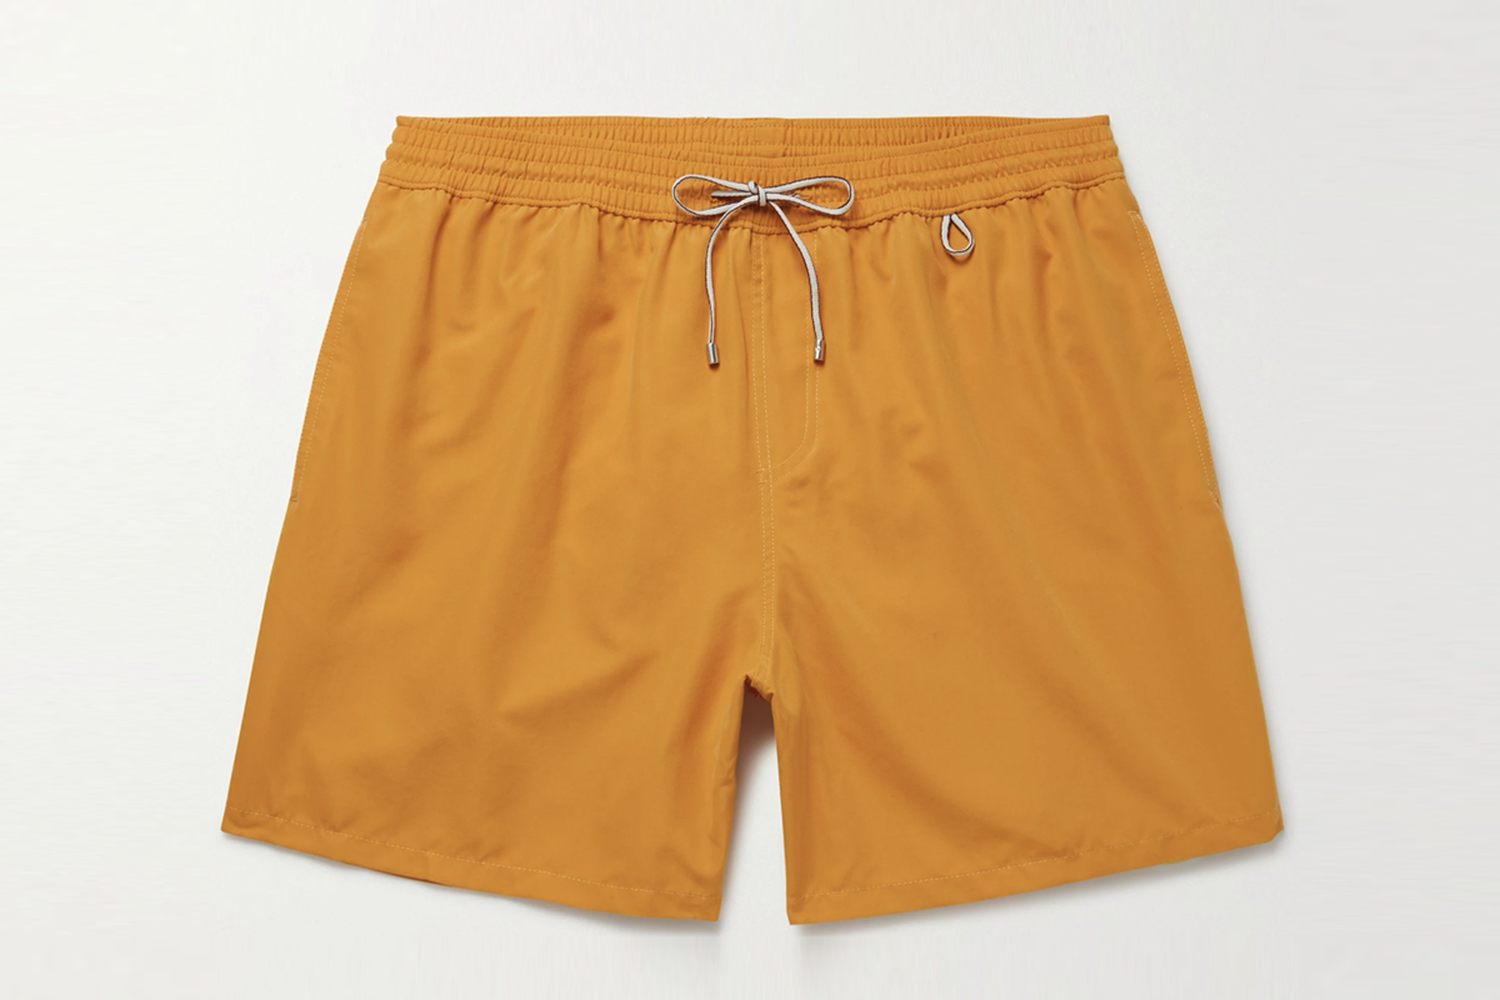 DHVJBC Mens Sushi Chopsticks Summer Holiday Quick-Drying Swim Trunks Beach Shorts Board Shorts